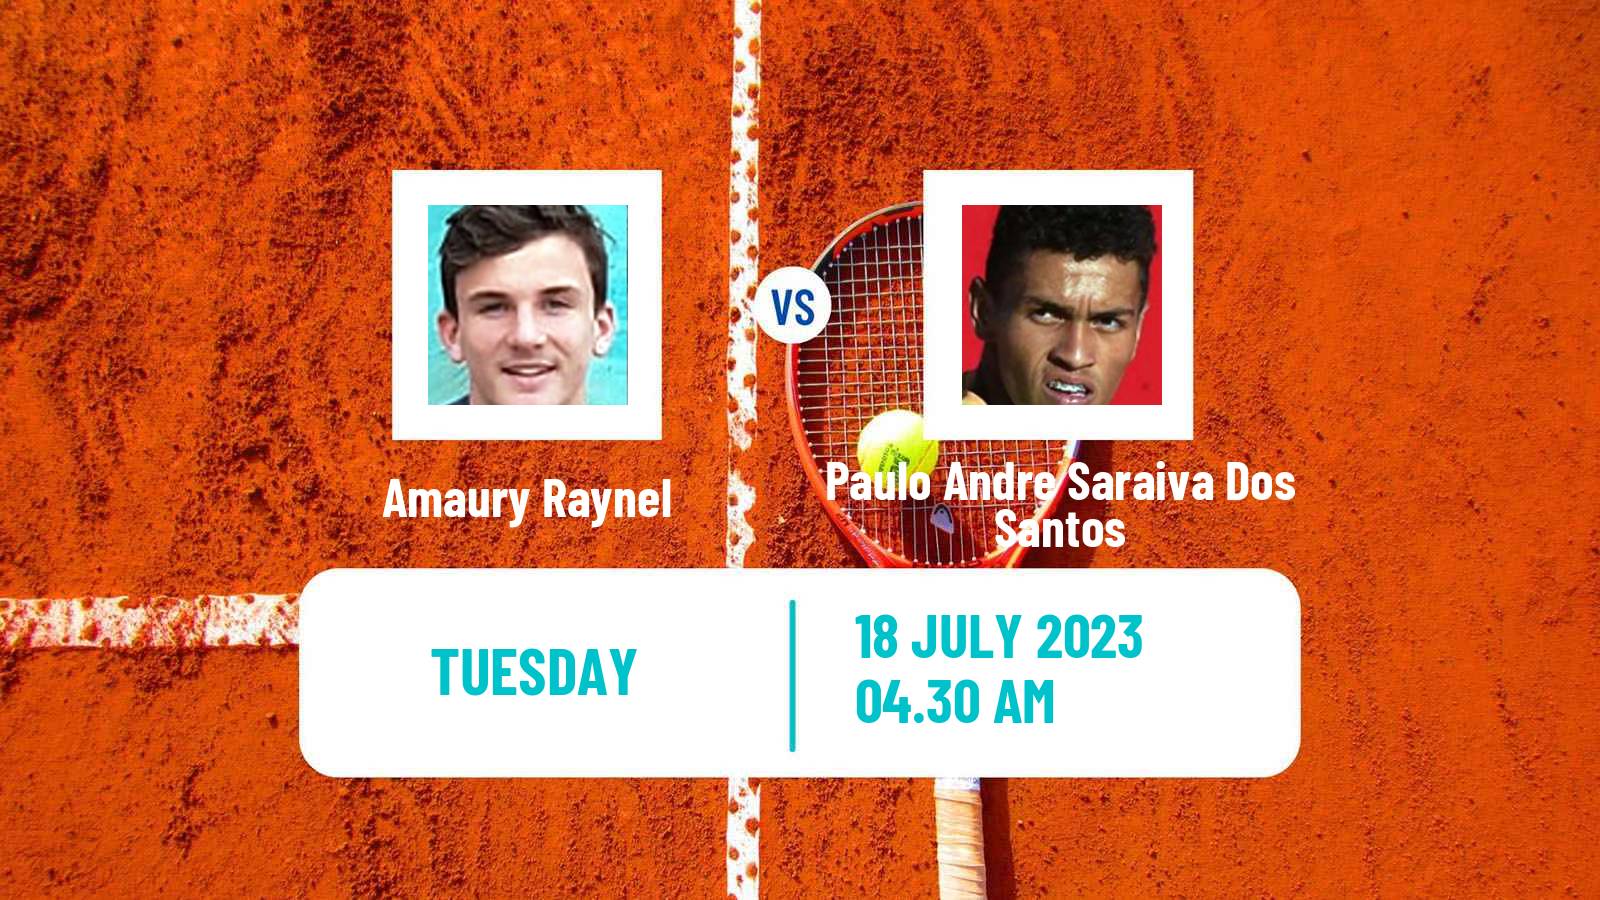 Tennis ITF M25 Esch Alzette 2 Men Amaury Raynel - Paulo Andre Saraiva Dos Santos